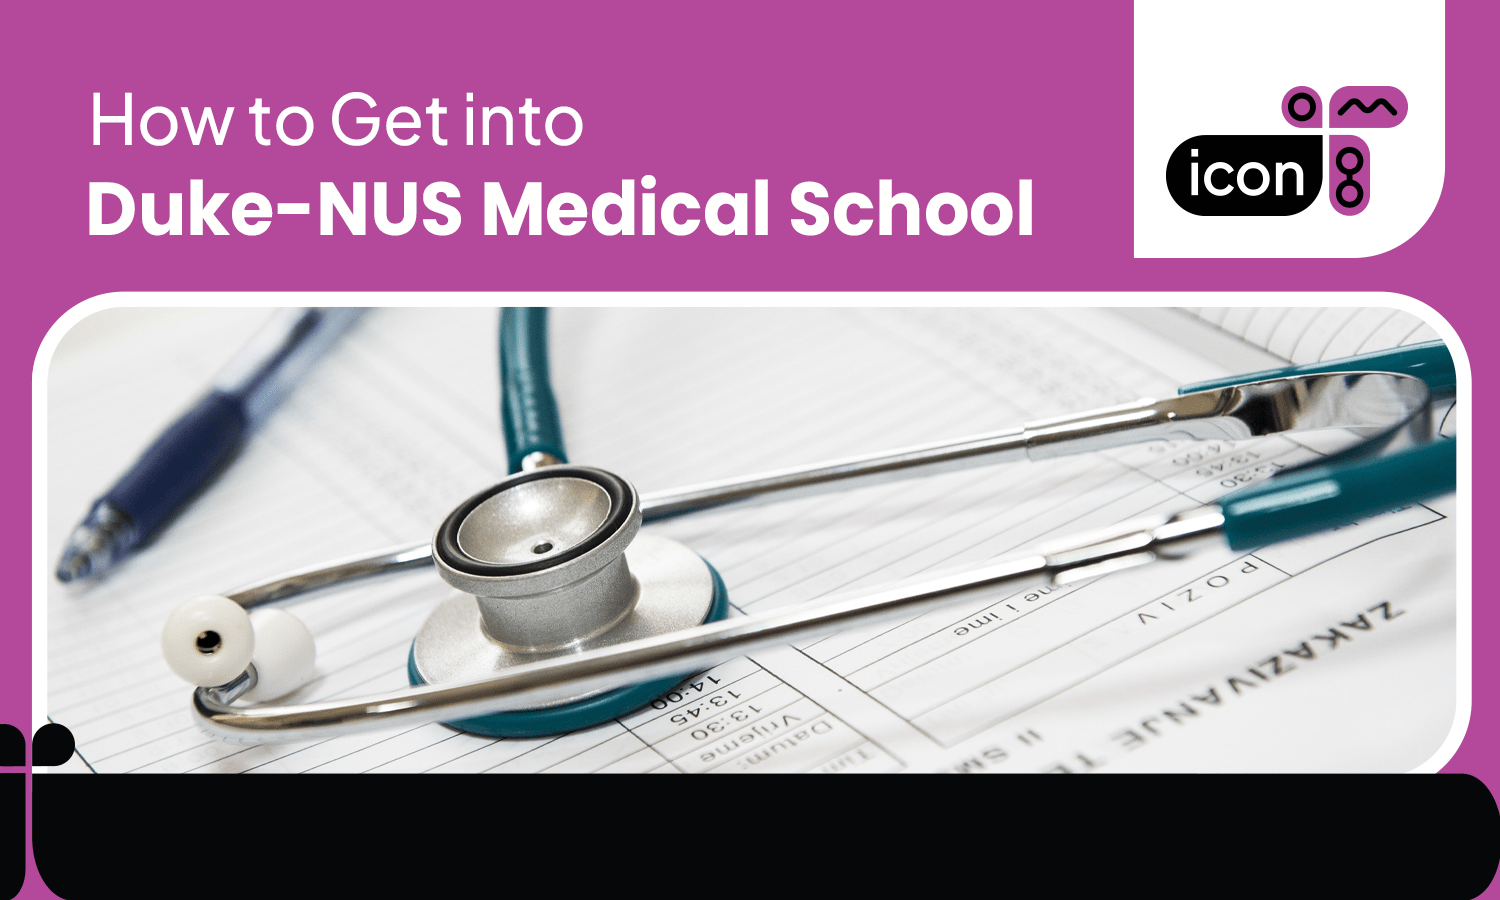 How to Get into Duke-NUS Medical School